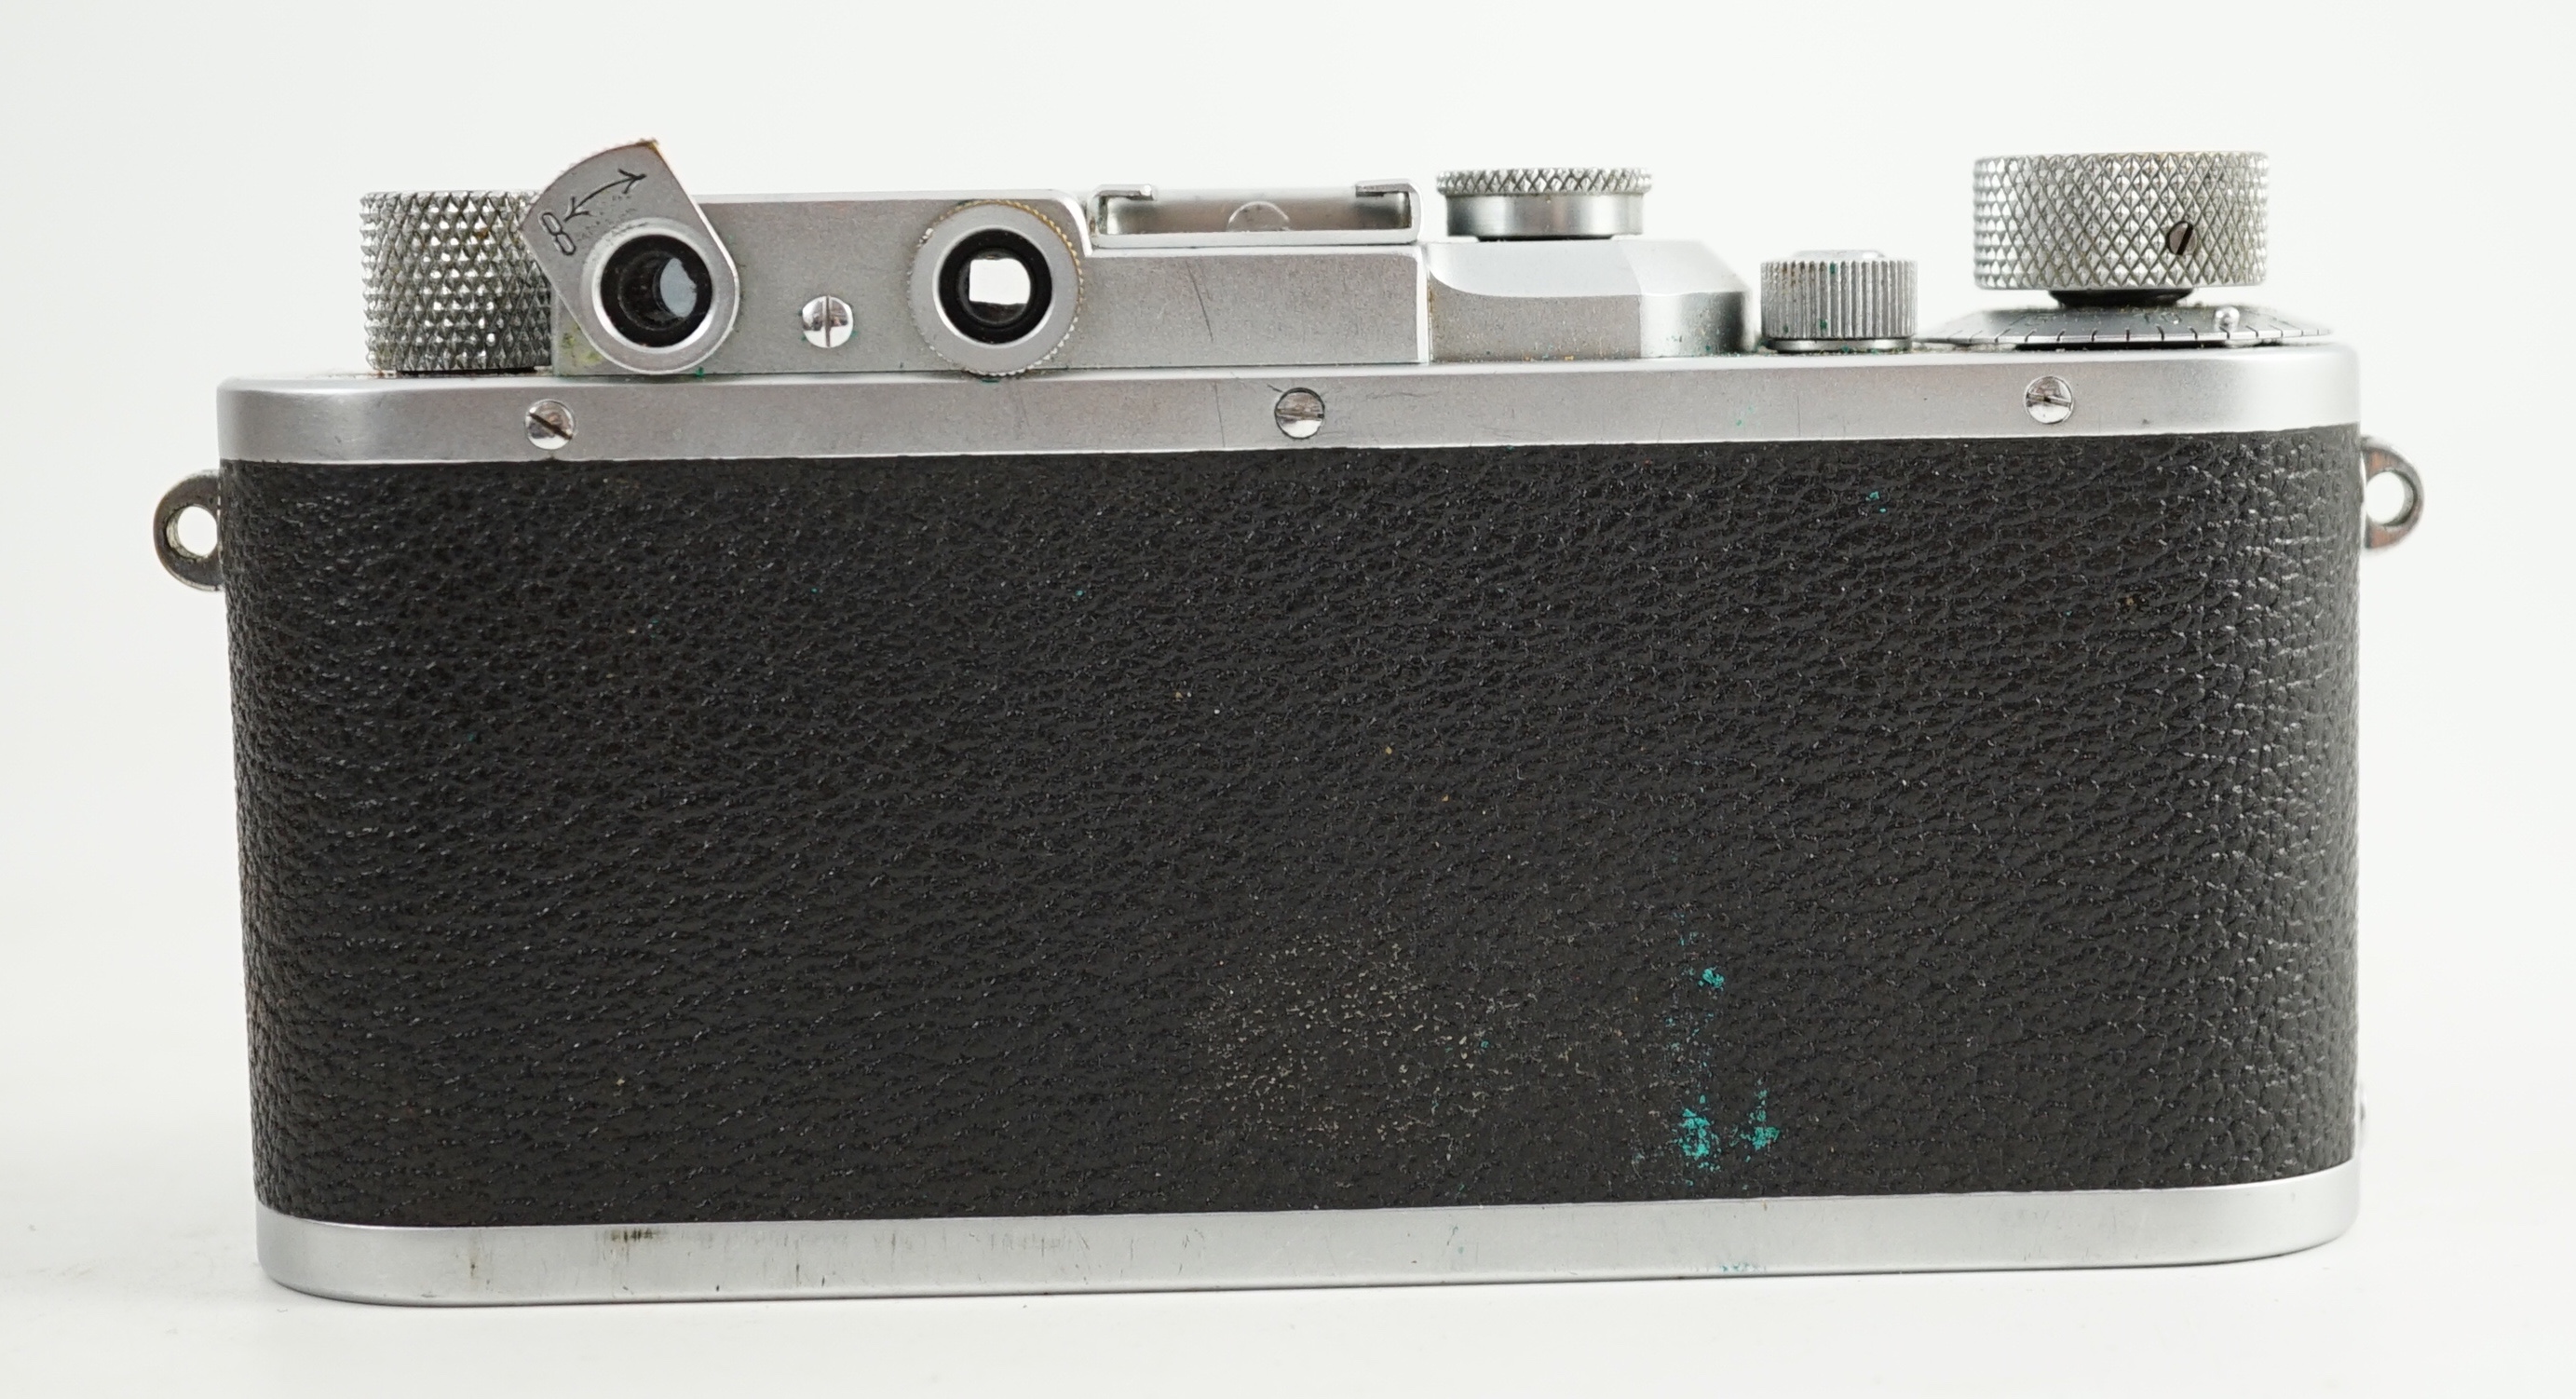 A Leica IIIa camera, number 302196 with Leitz Elmar F51:35 lens